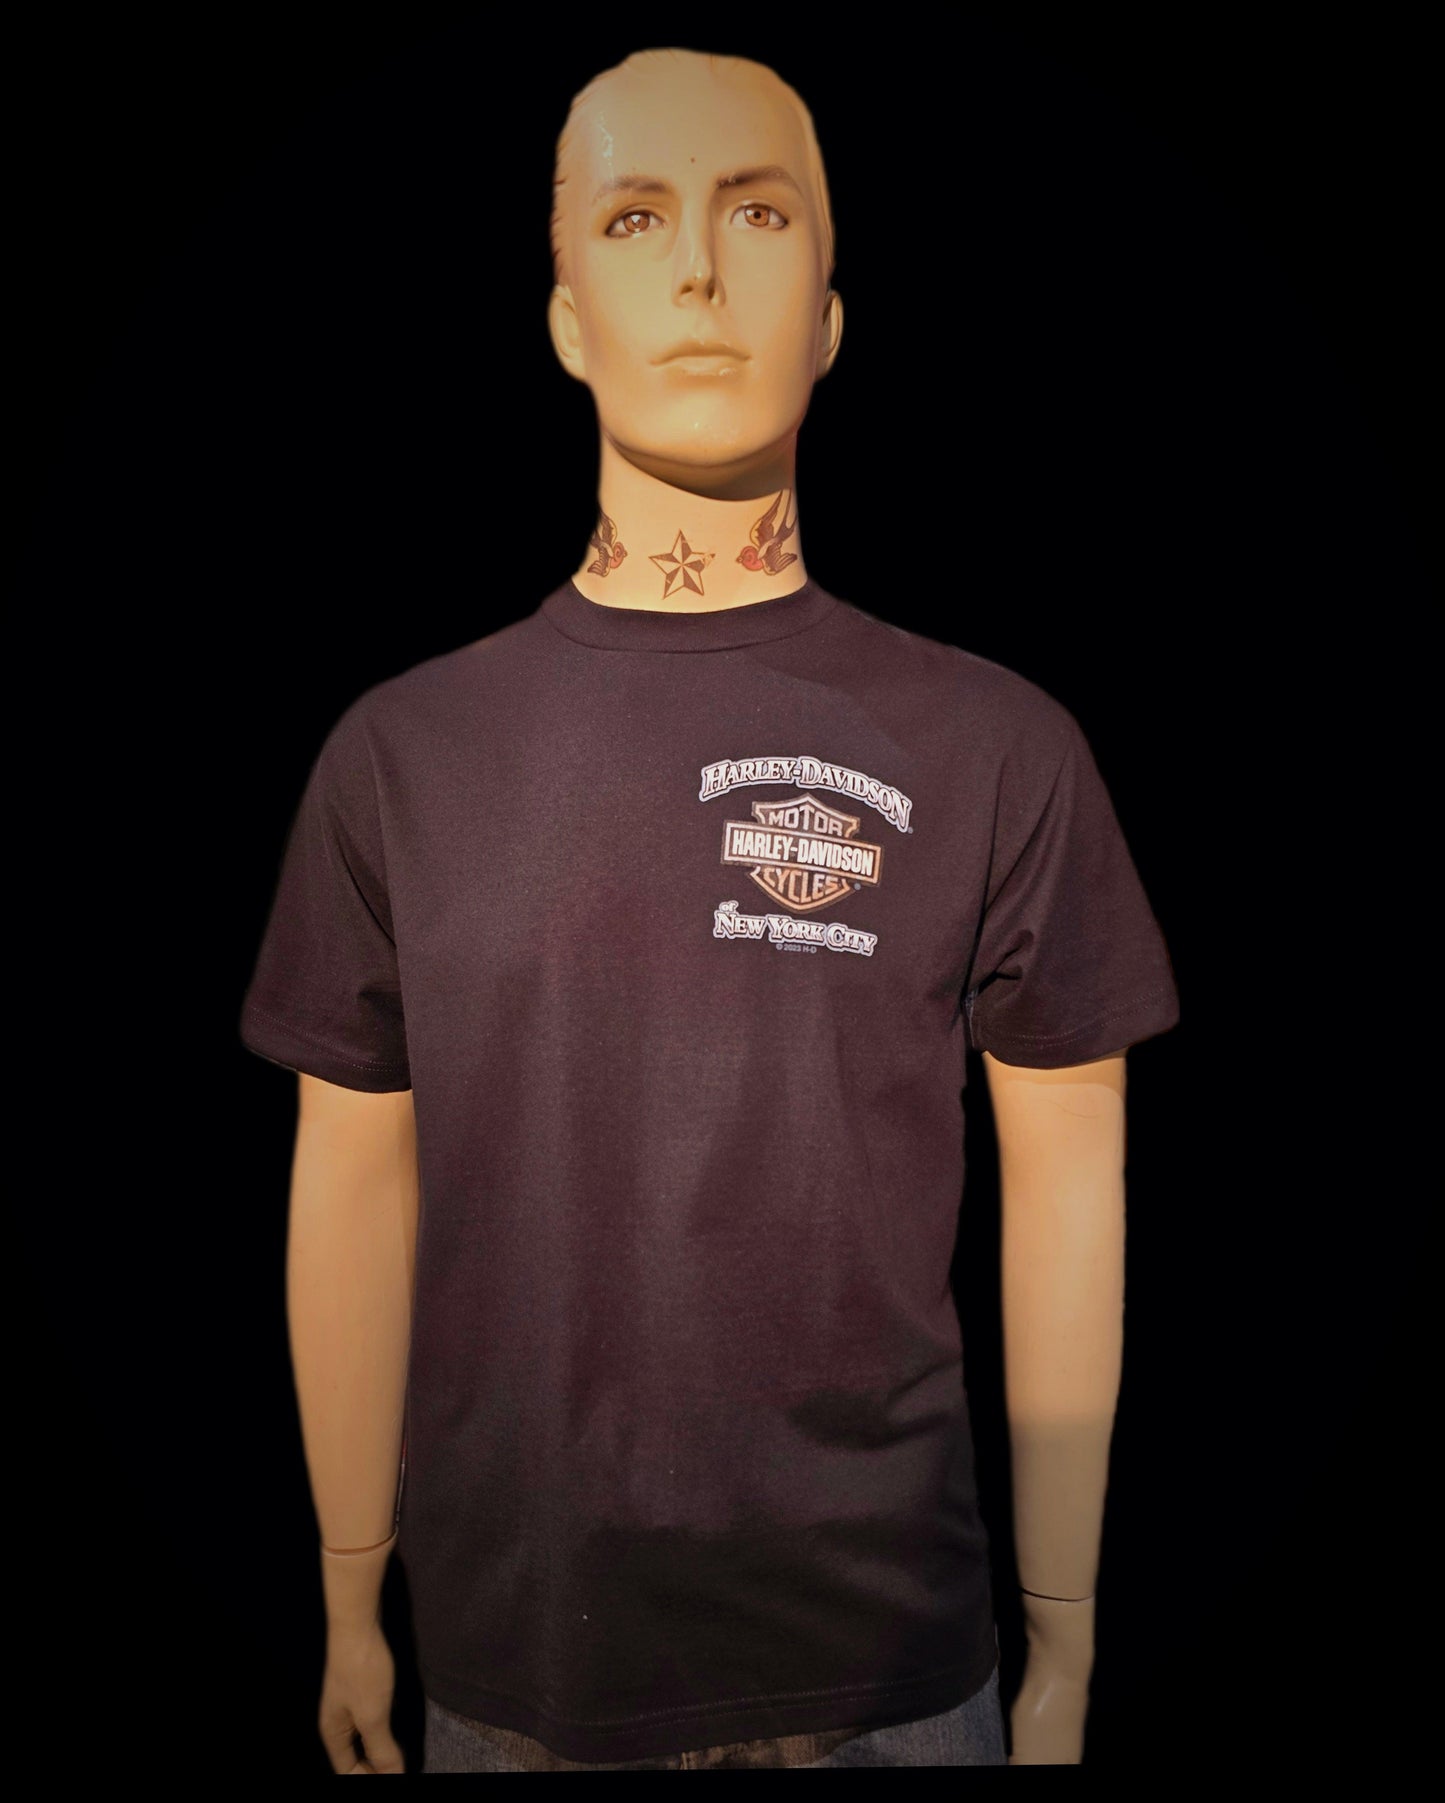 Harley Davidson Of NYC Men's Short Sleeve Dealer TAXI T-shirt - Harley Davidson Of Nyc